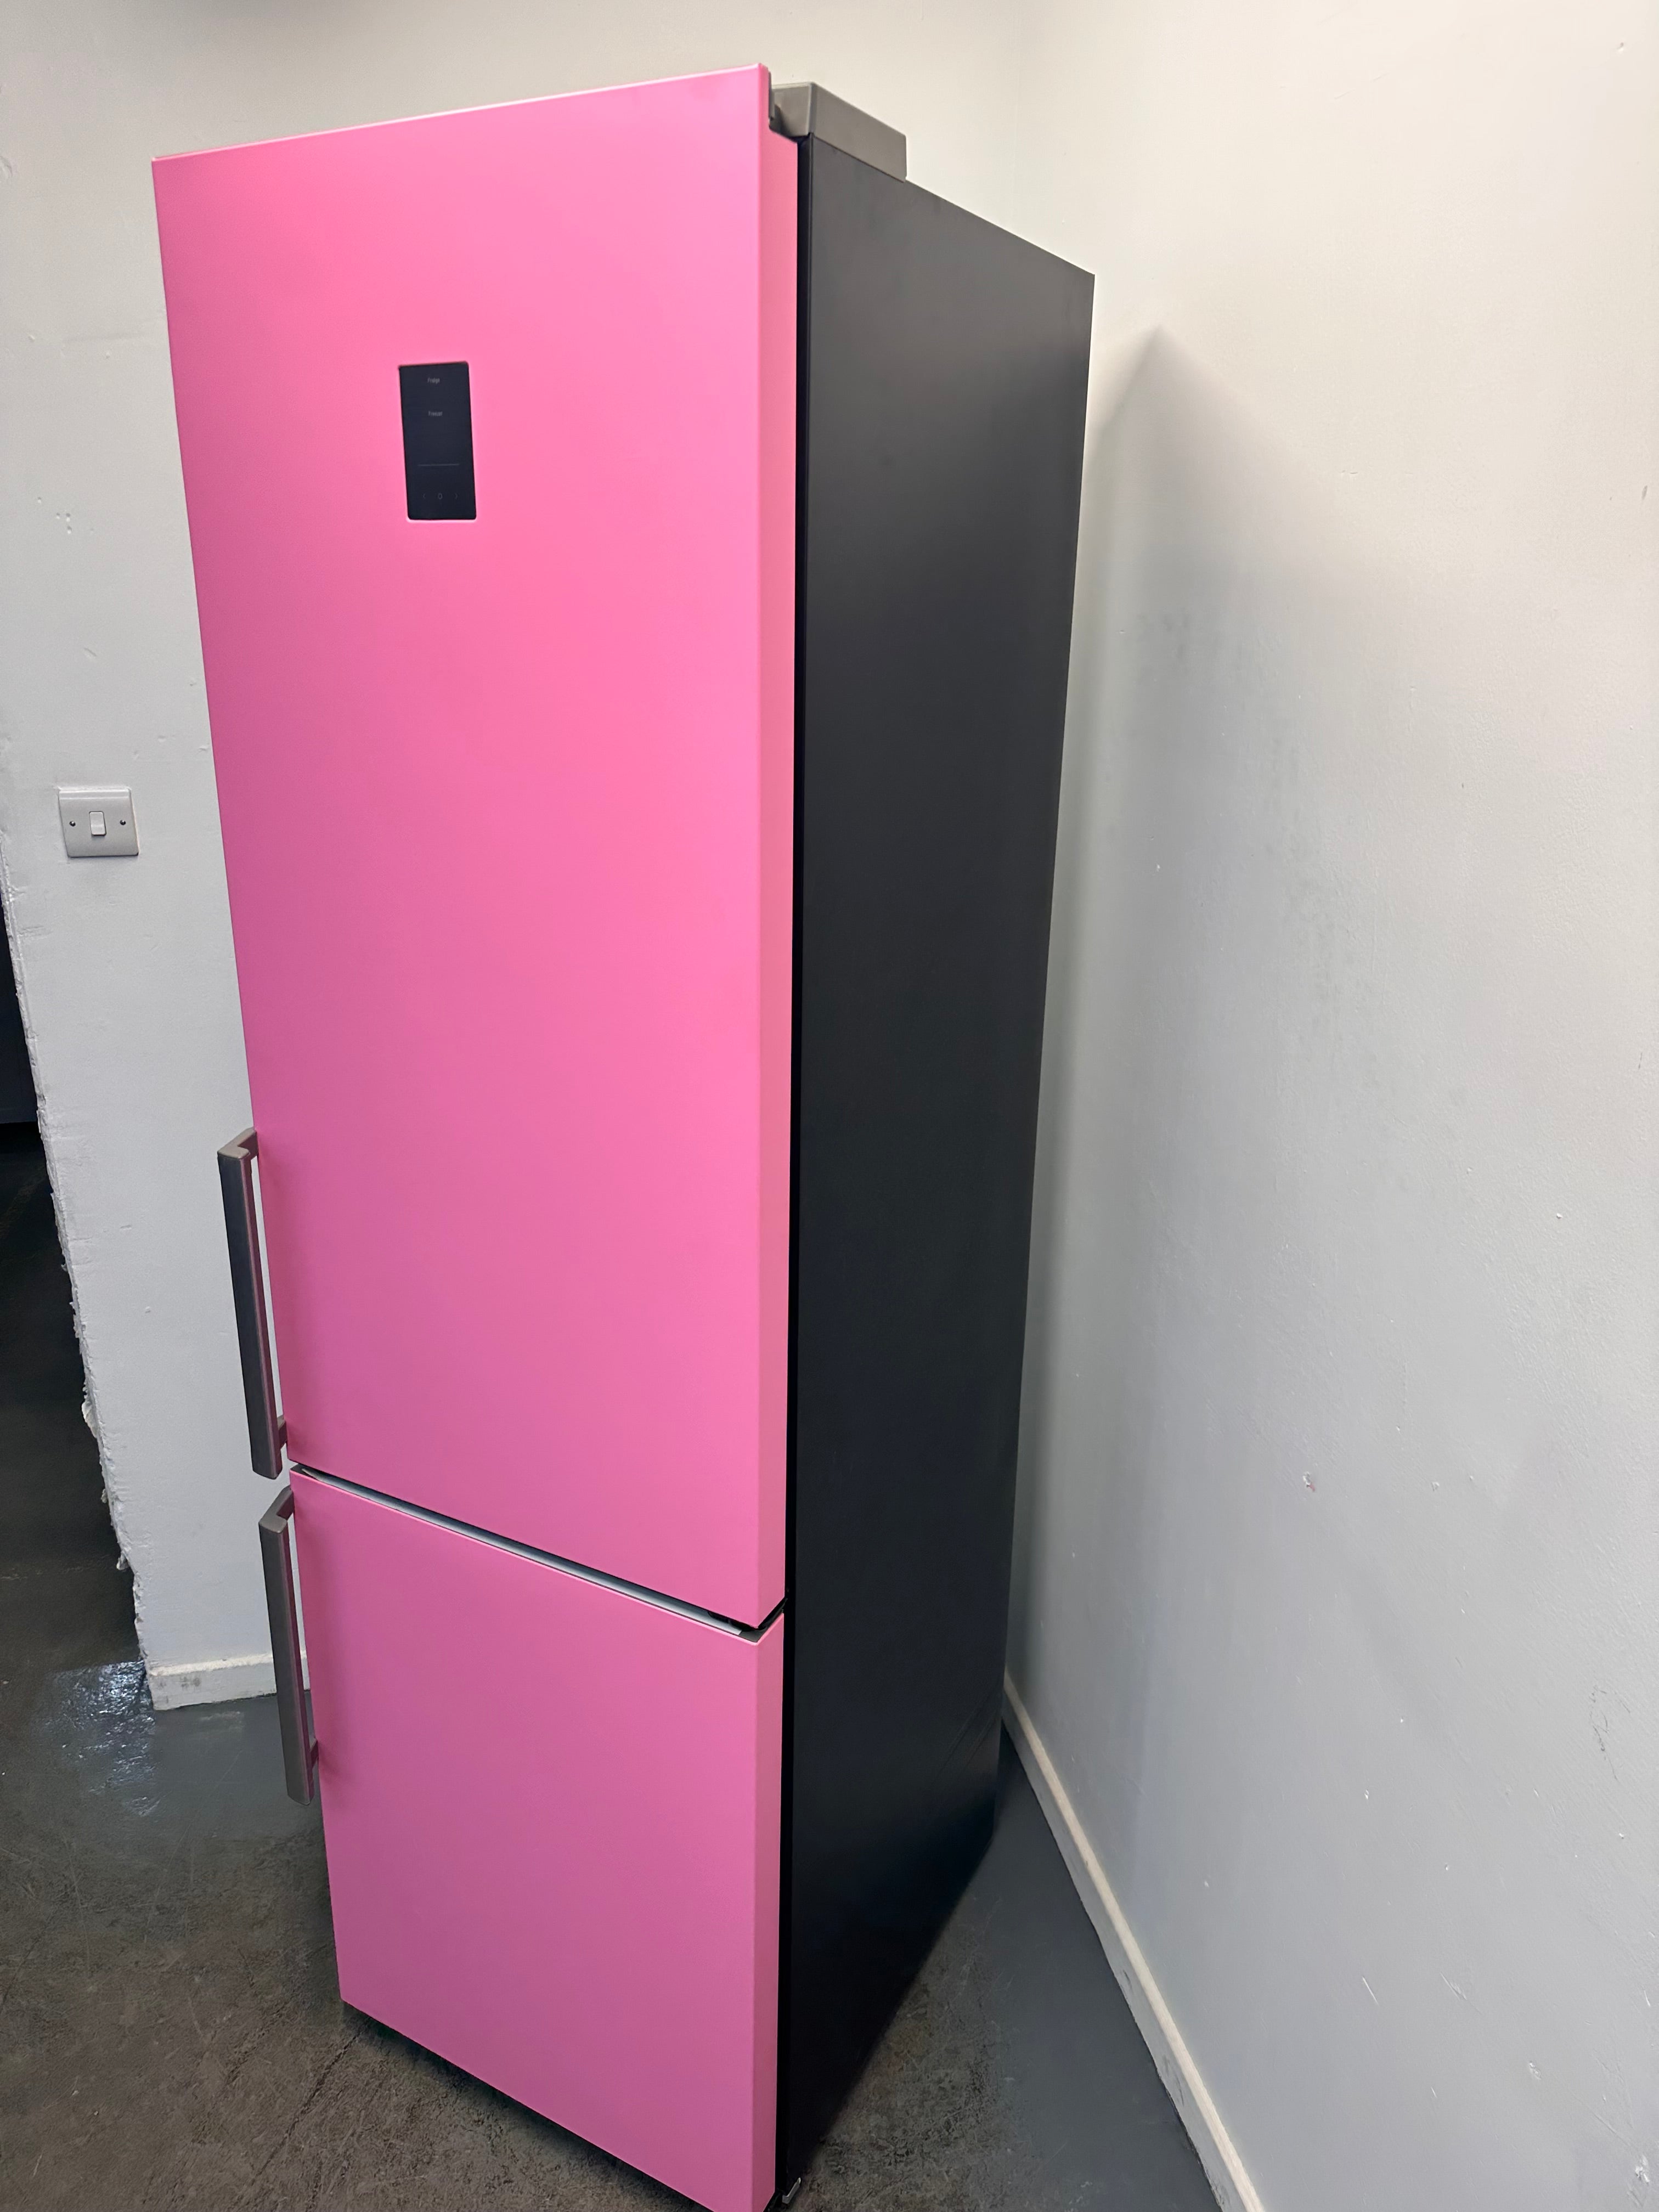 Samsung RB38T665 Fridge Freezer Freestanding Frost Free Bespoke Bubblegum Pink